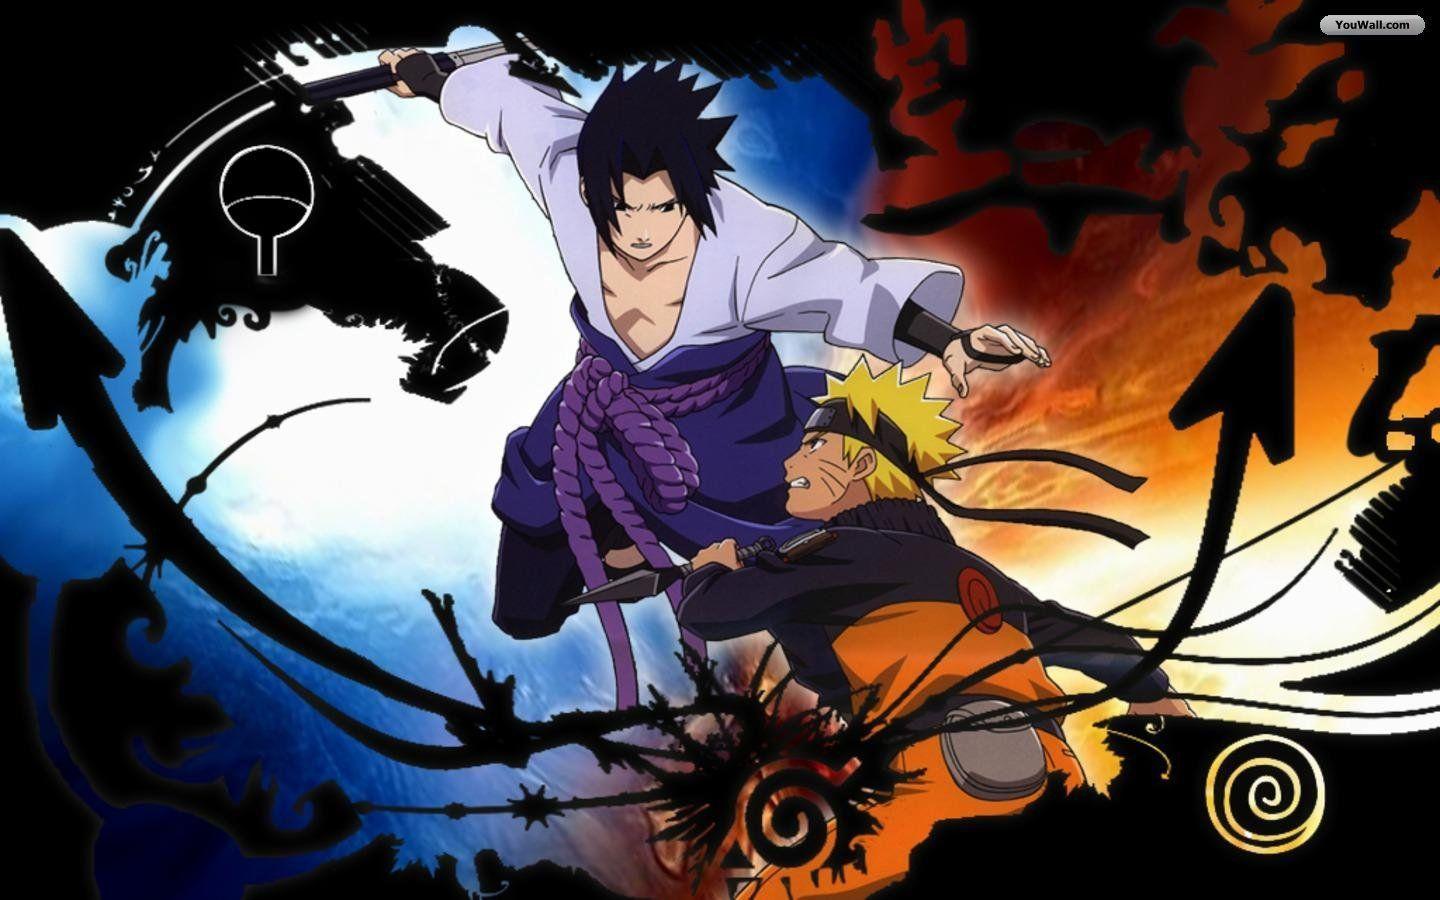 Kiba16 image Sasuke vs Naruto HD wallpaper and background photo